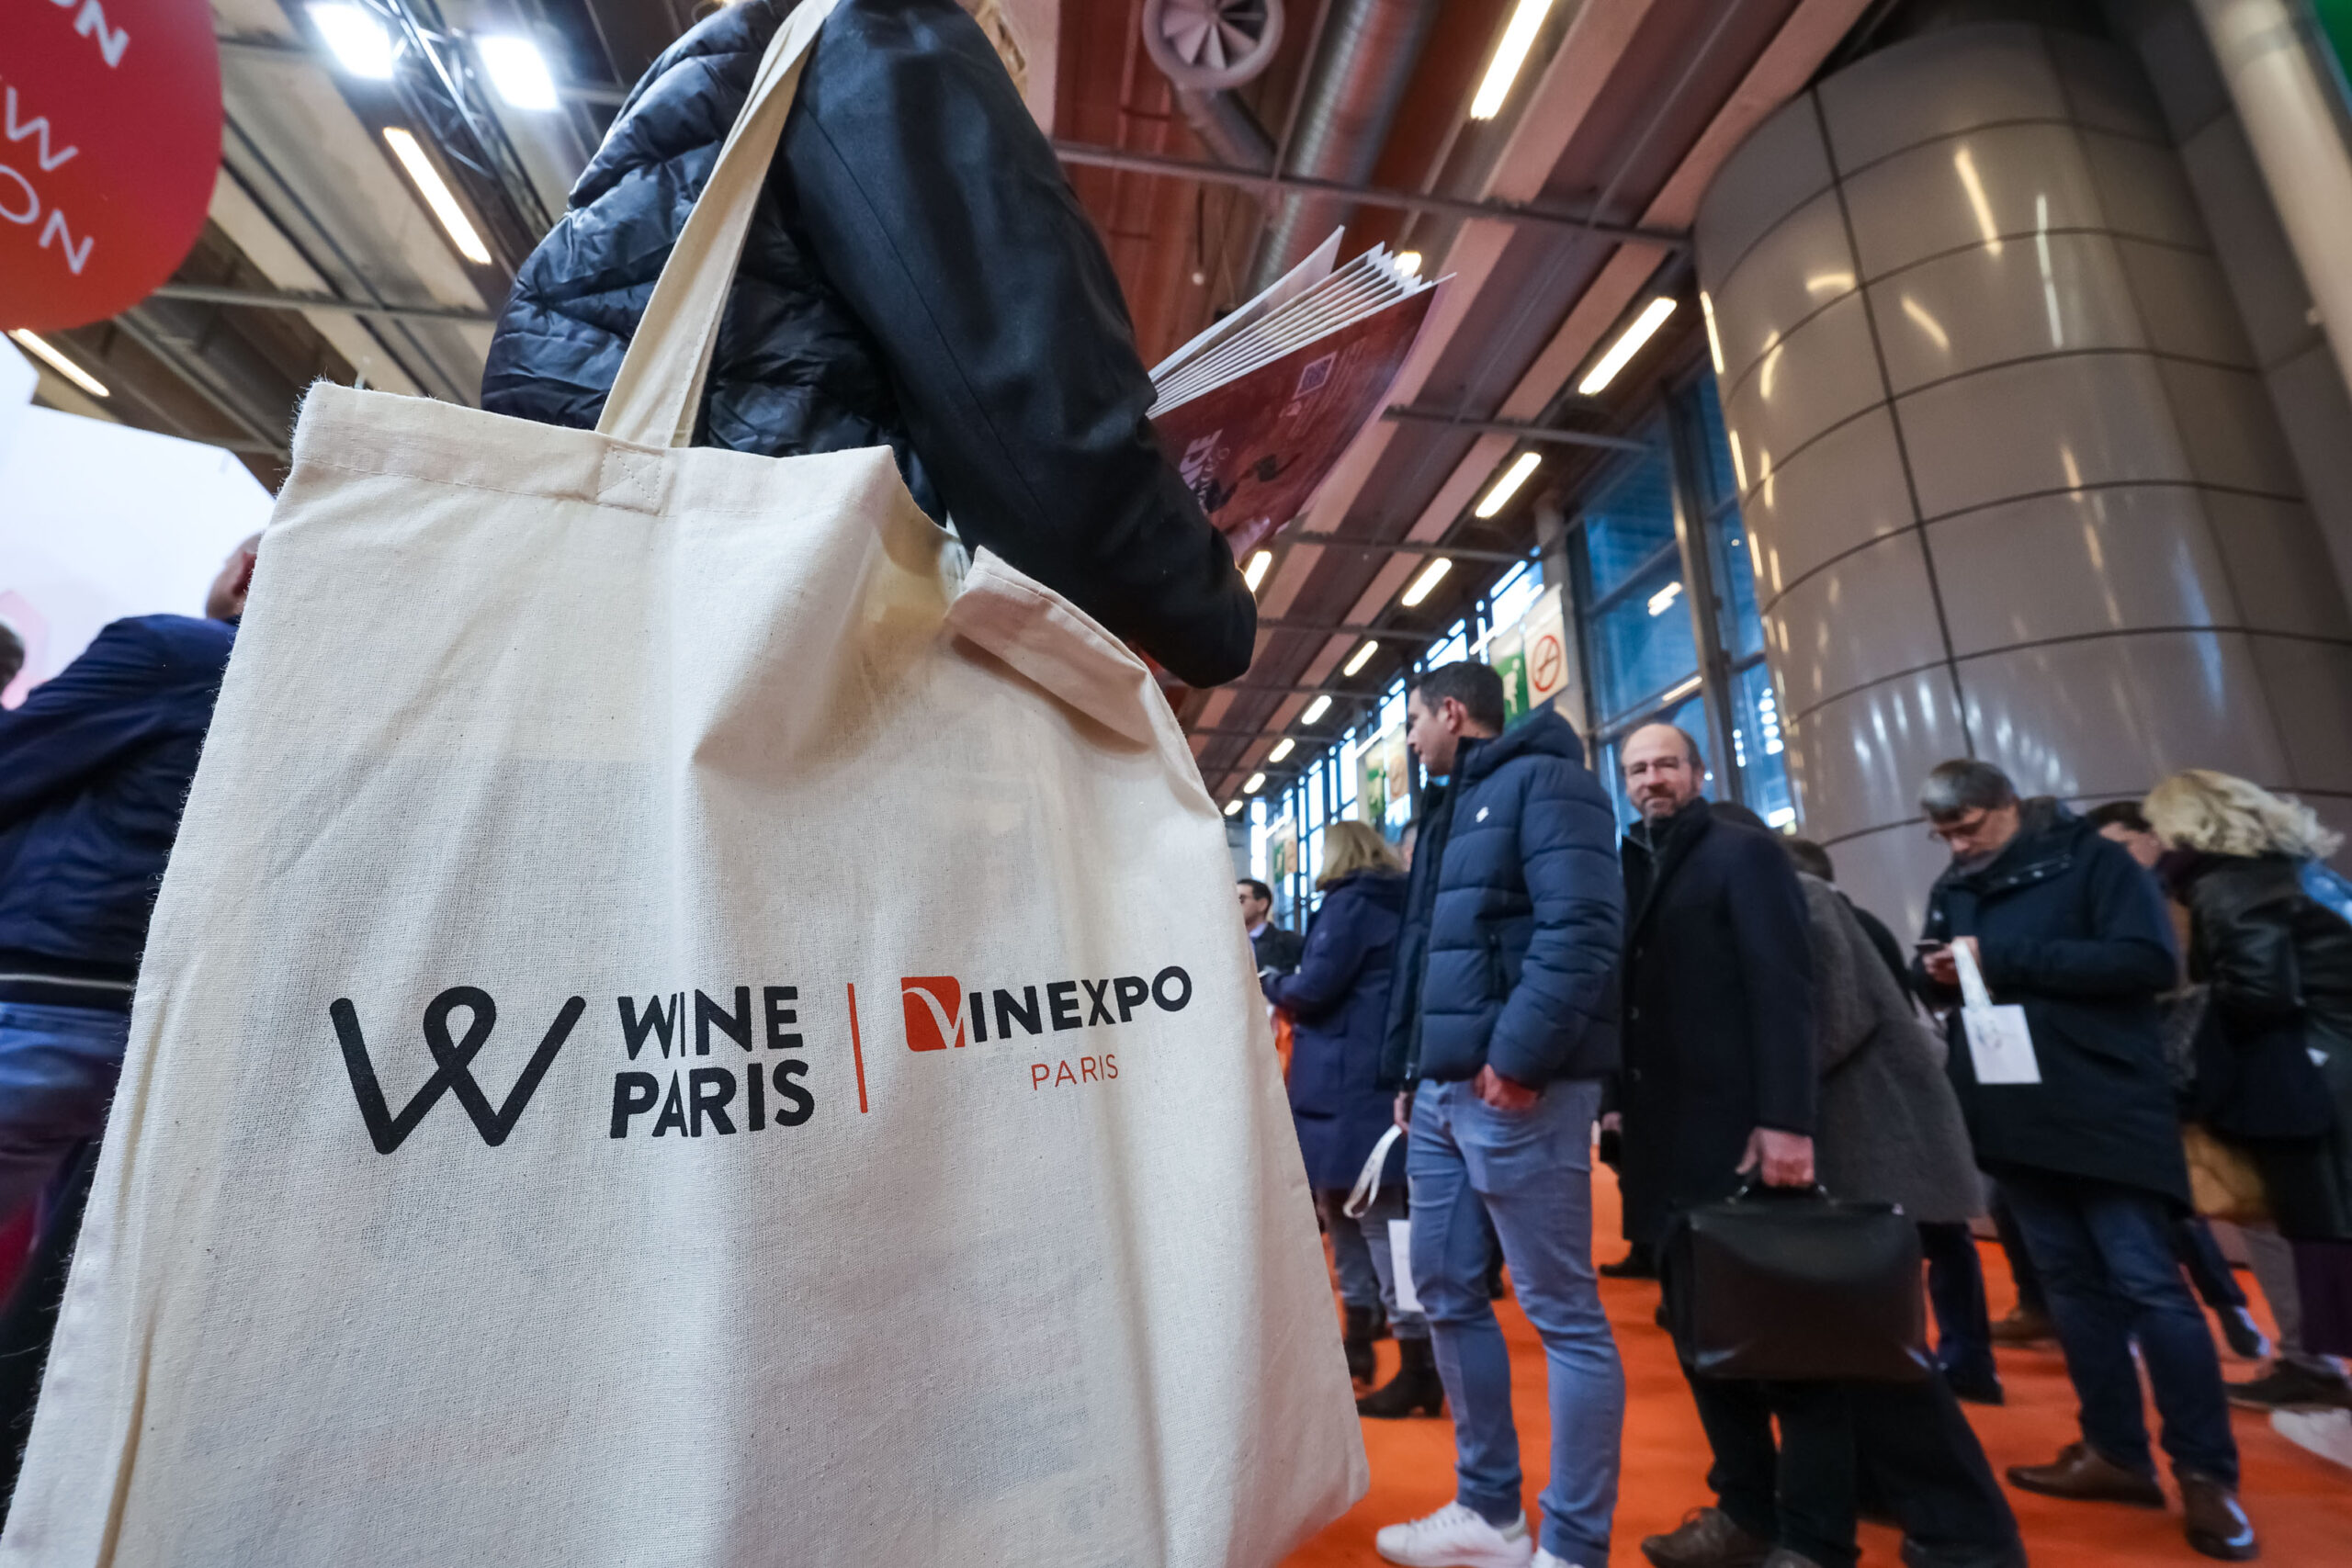 Wine Paris & Vinexpo Paris – The global wine and spirits industry professionals have spent 3 intense days in Paris